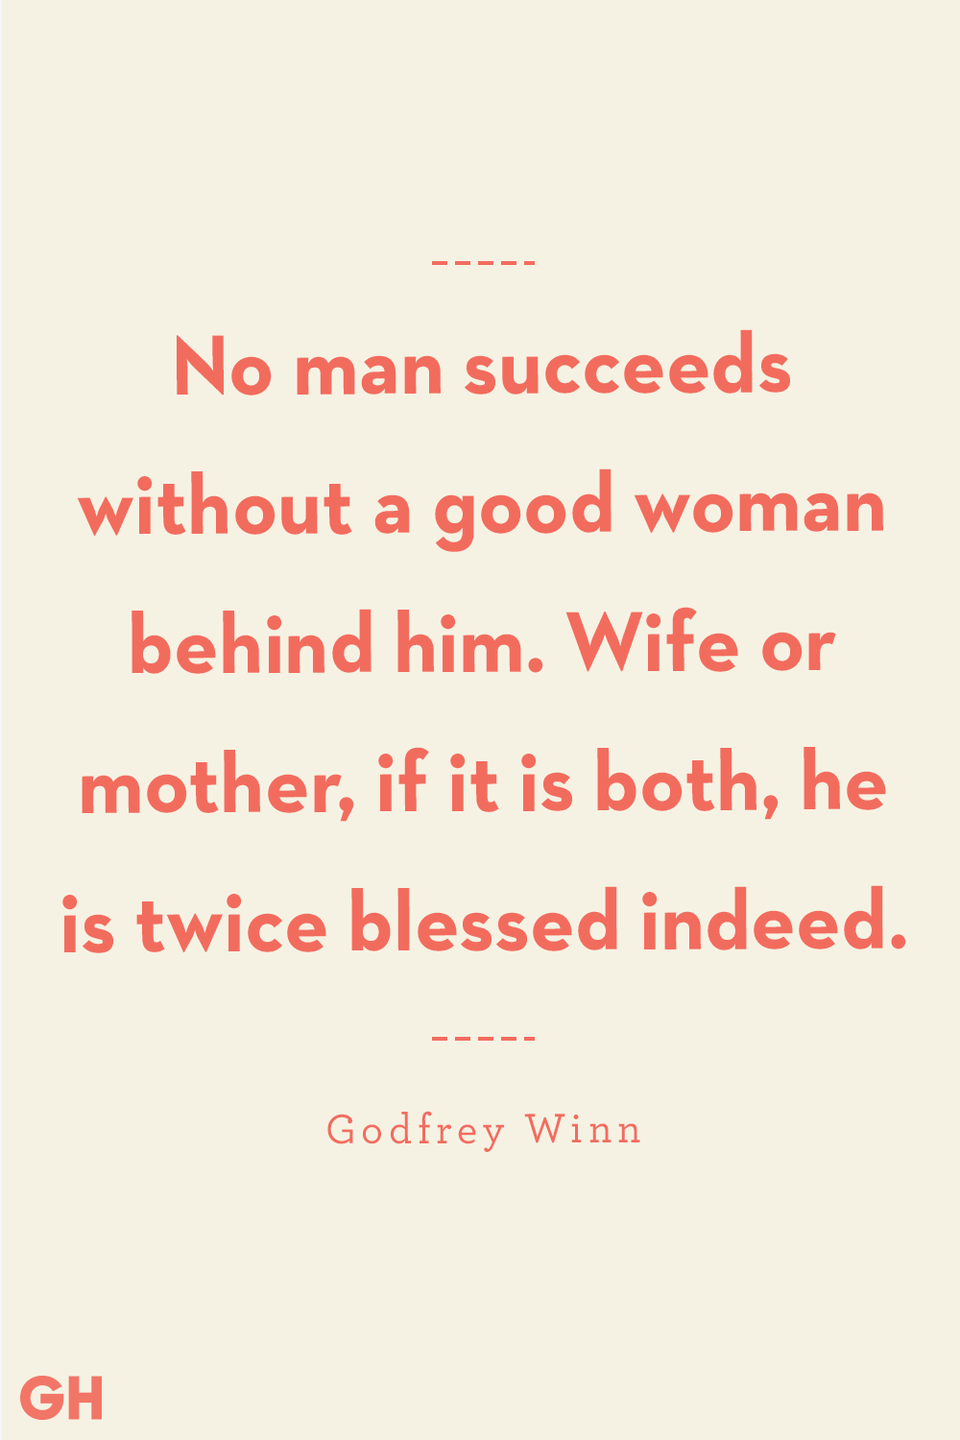 22) Godfrey Winn